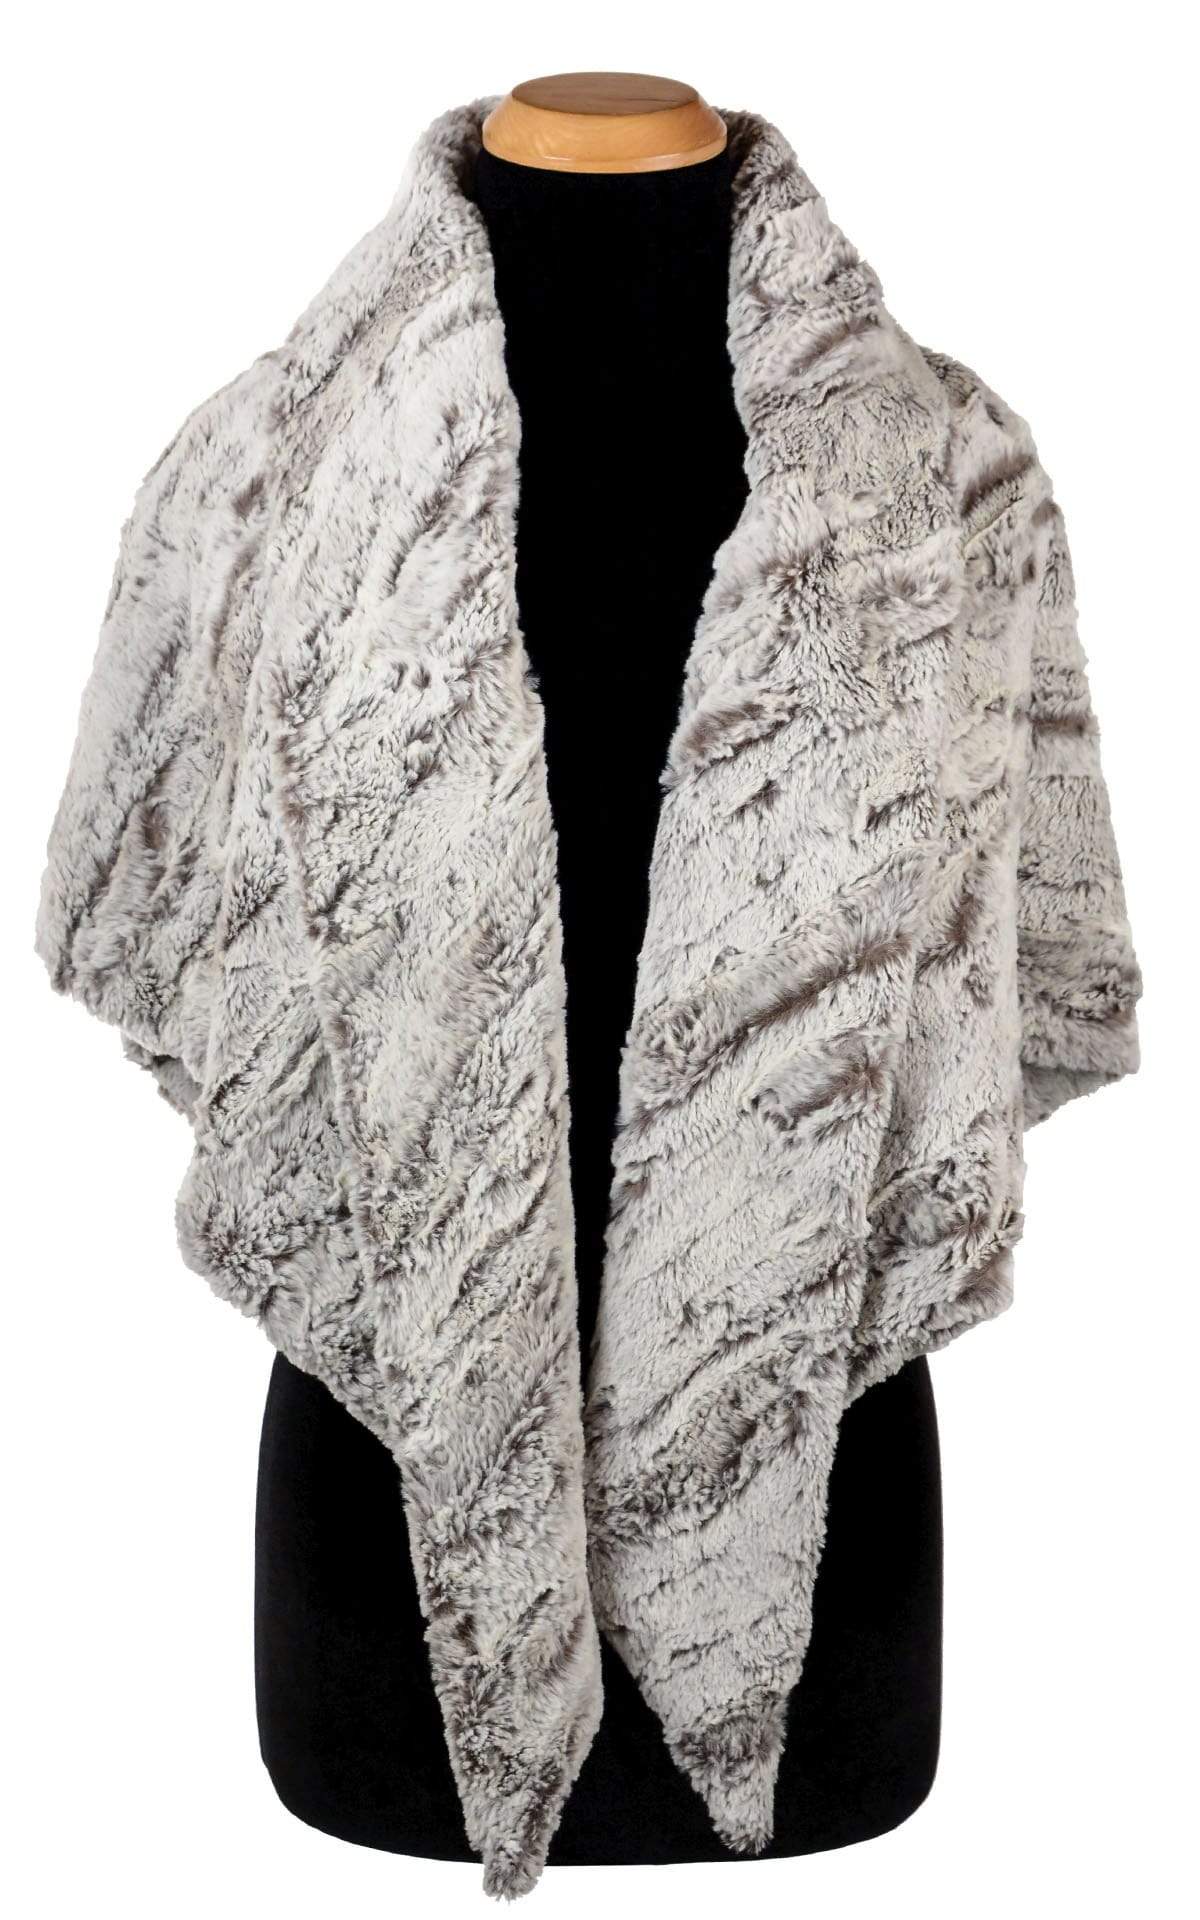 Women’s Product shot of Bermuda triangle scarf | Khaki faux fur, cream, gray | Handmade by Pandemonium Millinery Seattle, WA USA